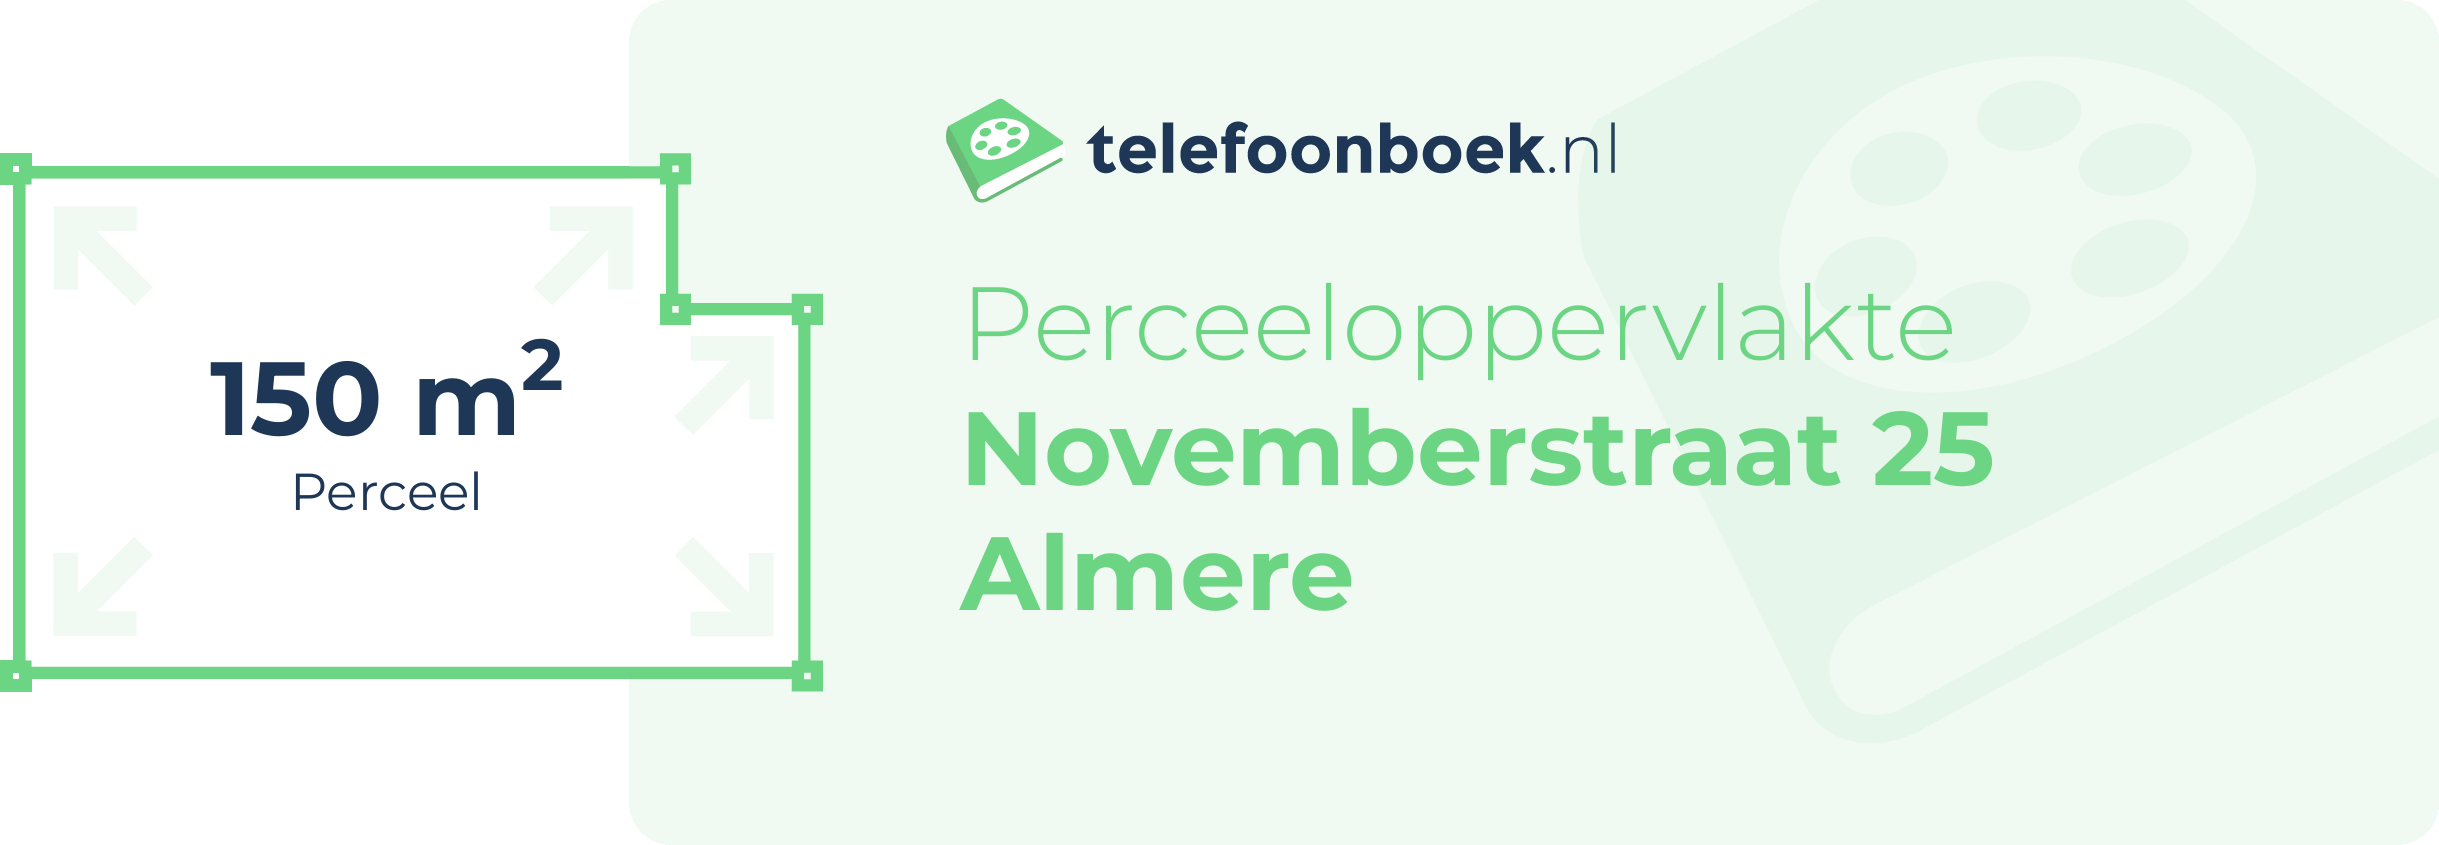 Perceeloppervlakte Novemberstraat 25 Almere